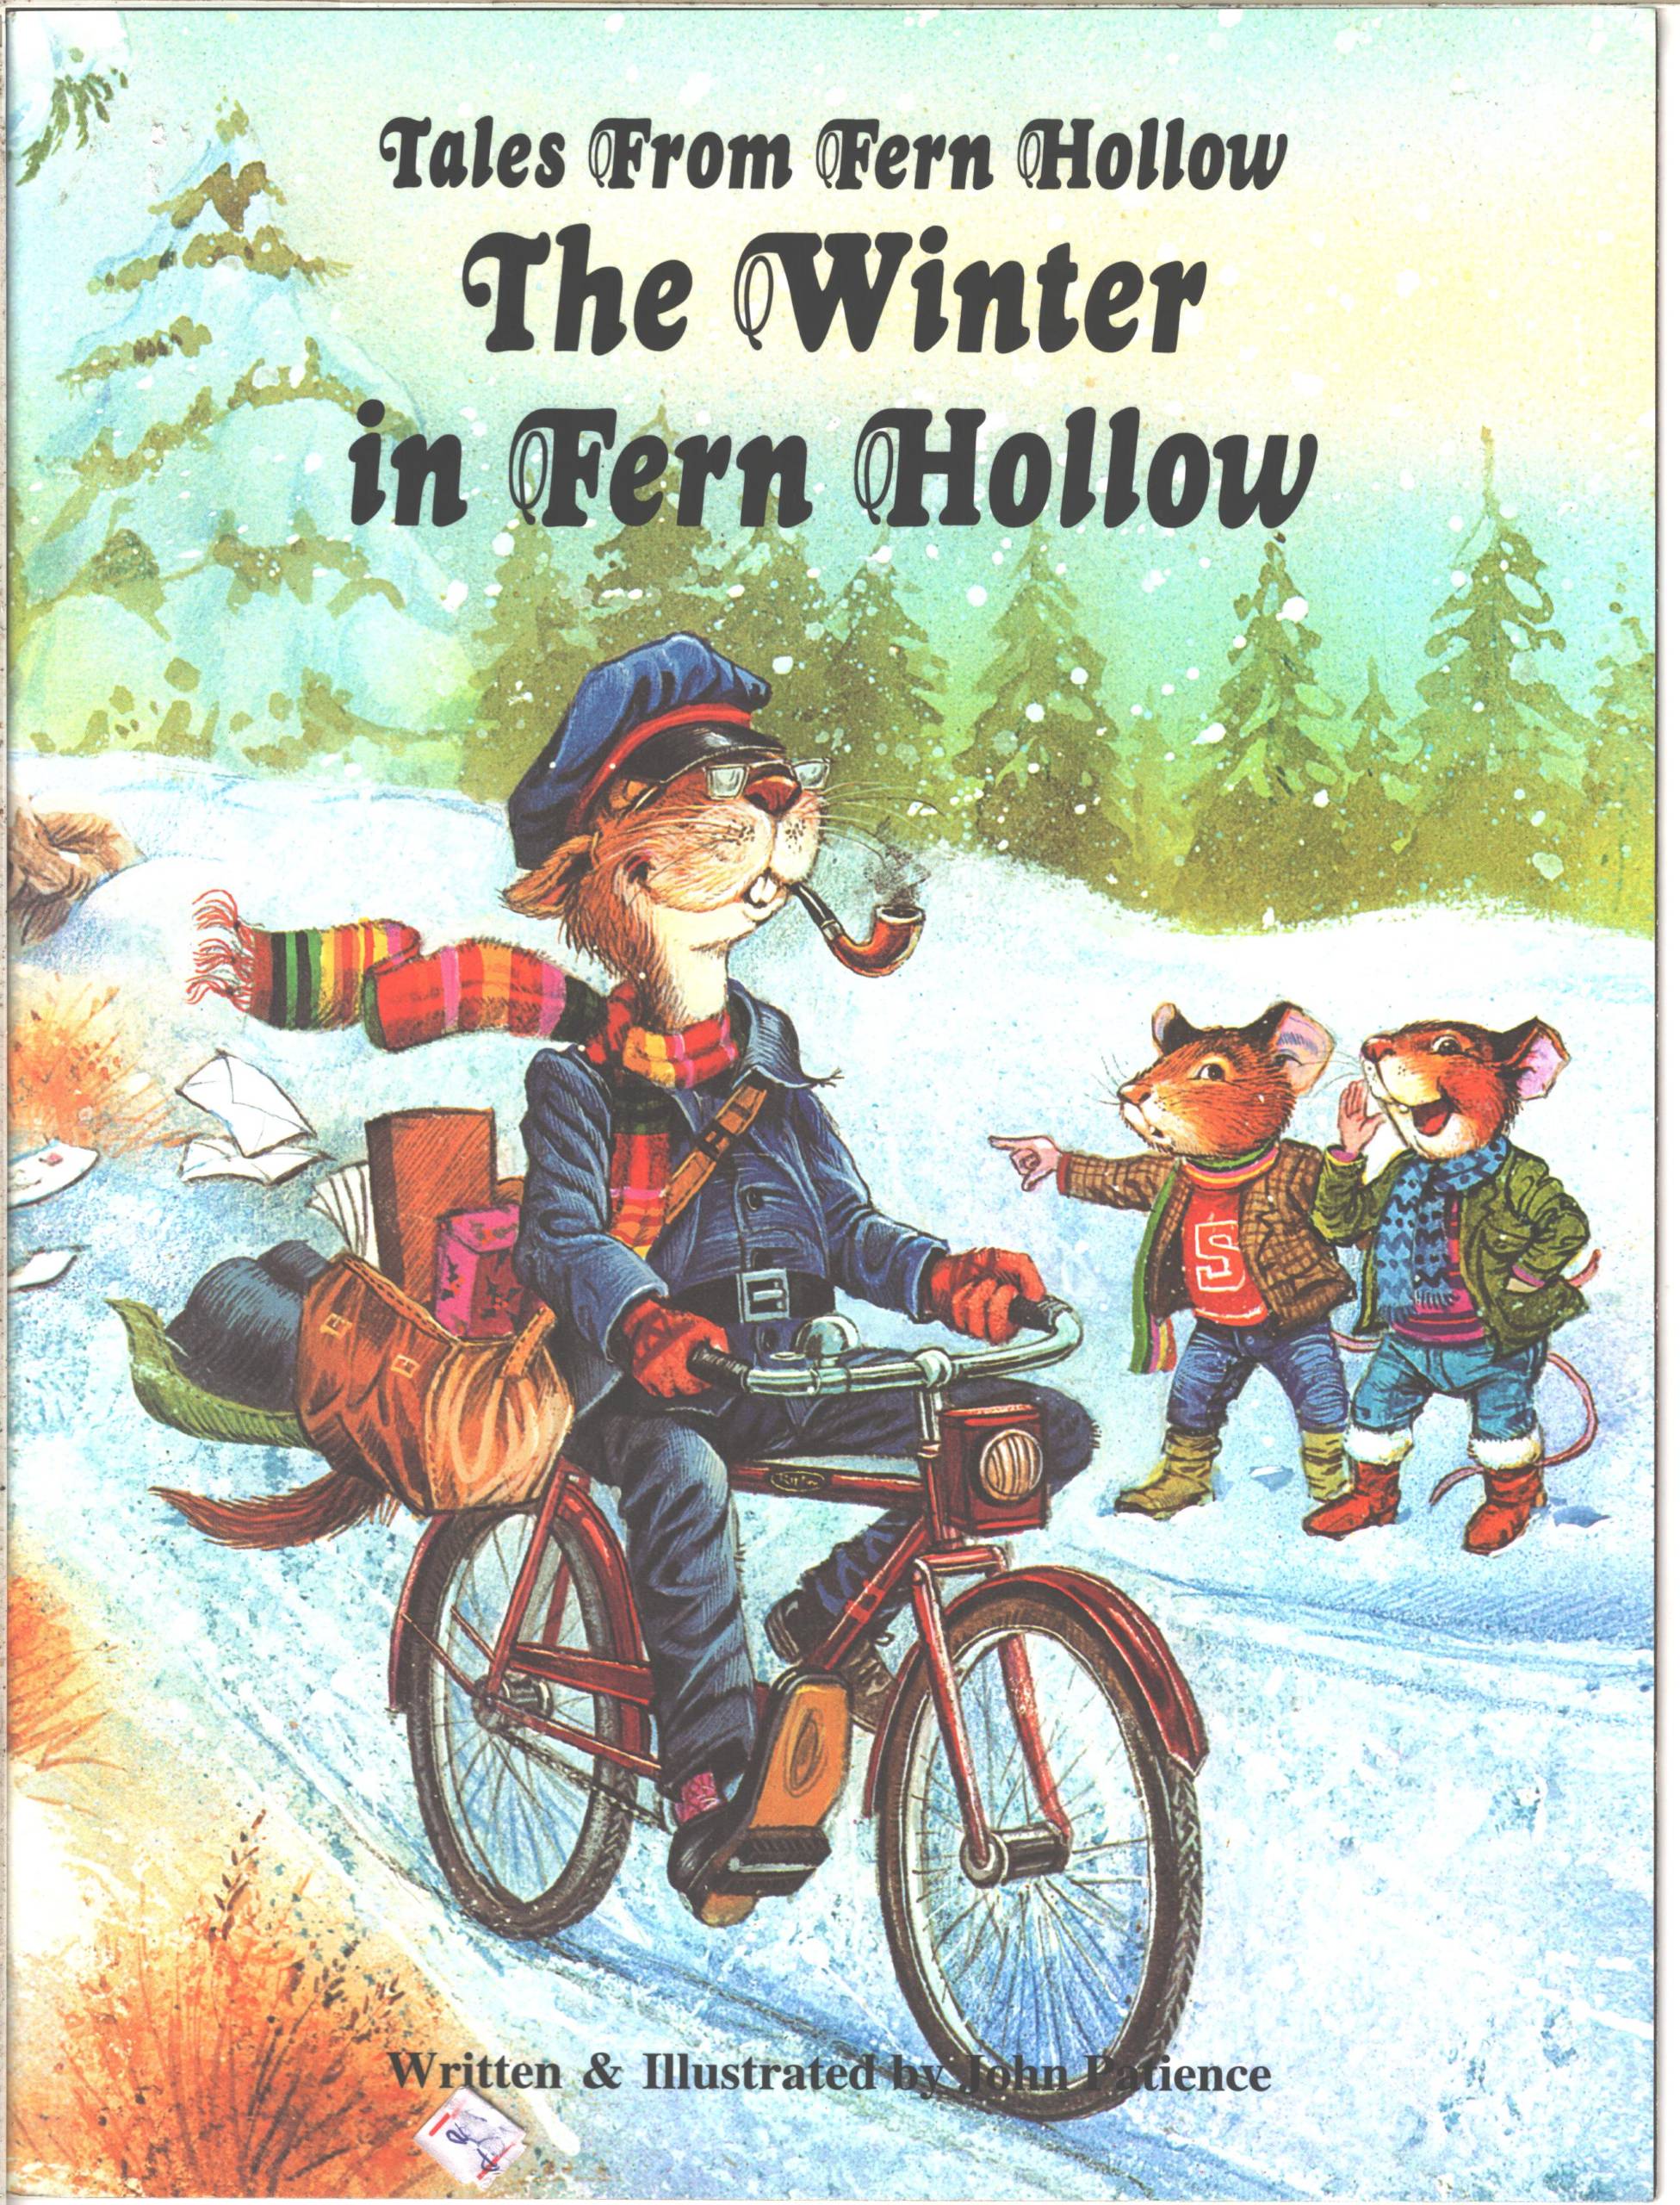 The Winter in Fern Hollow (Tales from Fern Hollow)